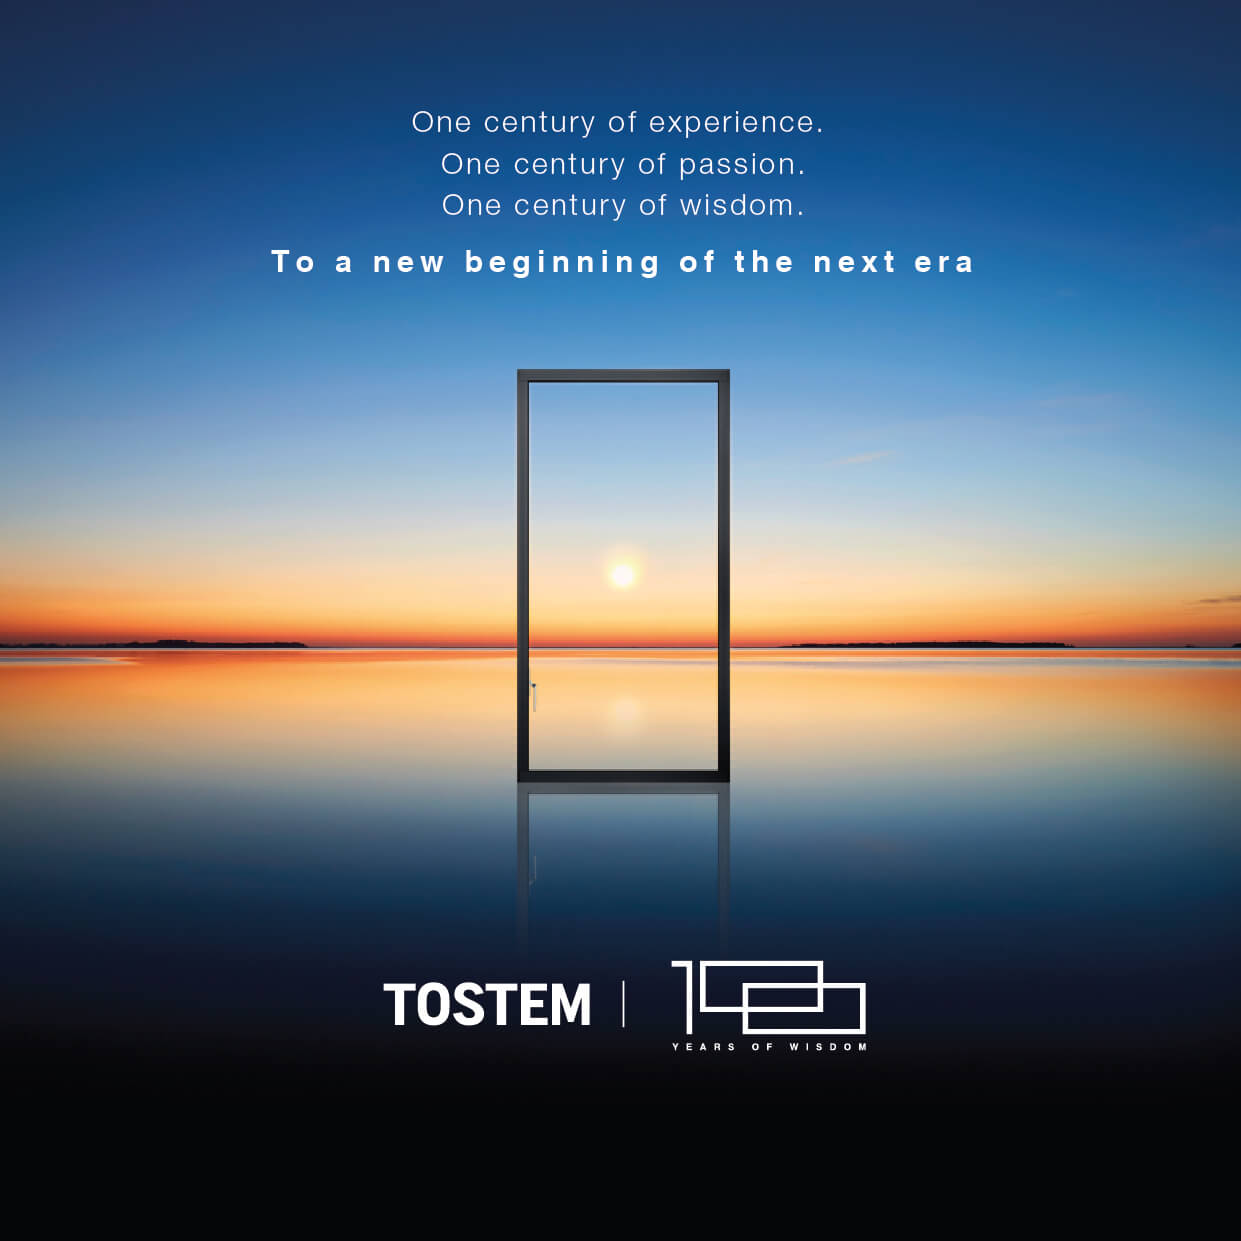 Celebrating TOSTEM’s 100 years of wisdom